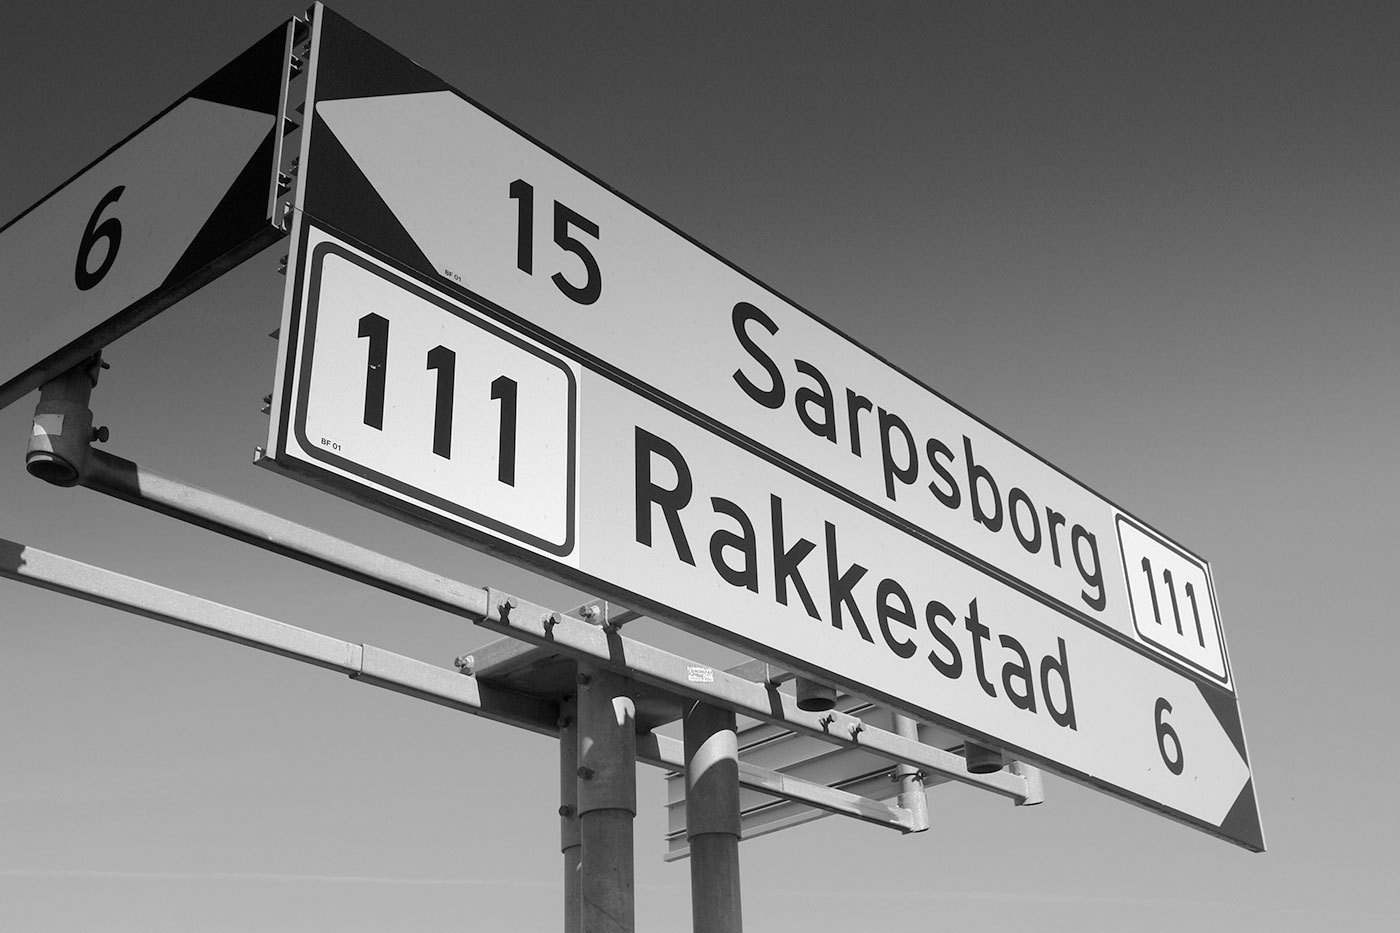 More information about "Traffic Sign Typefaces: Trafikkalfabetet (Norway)"